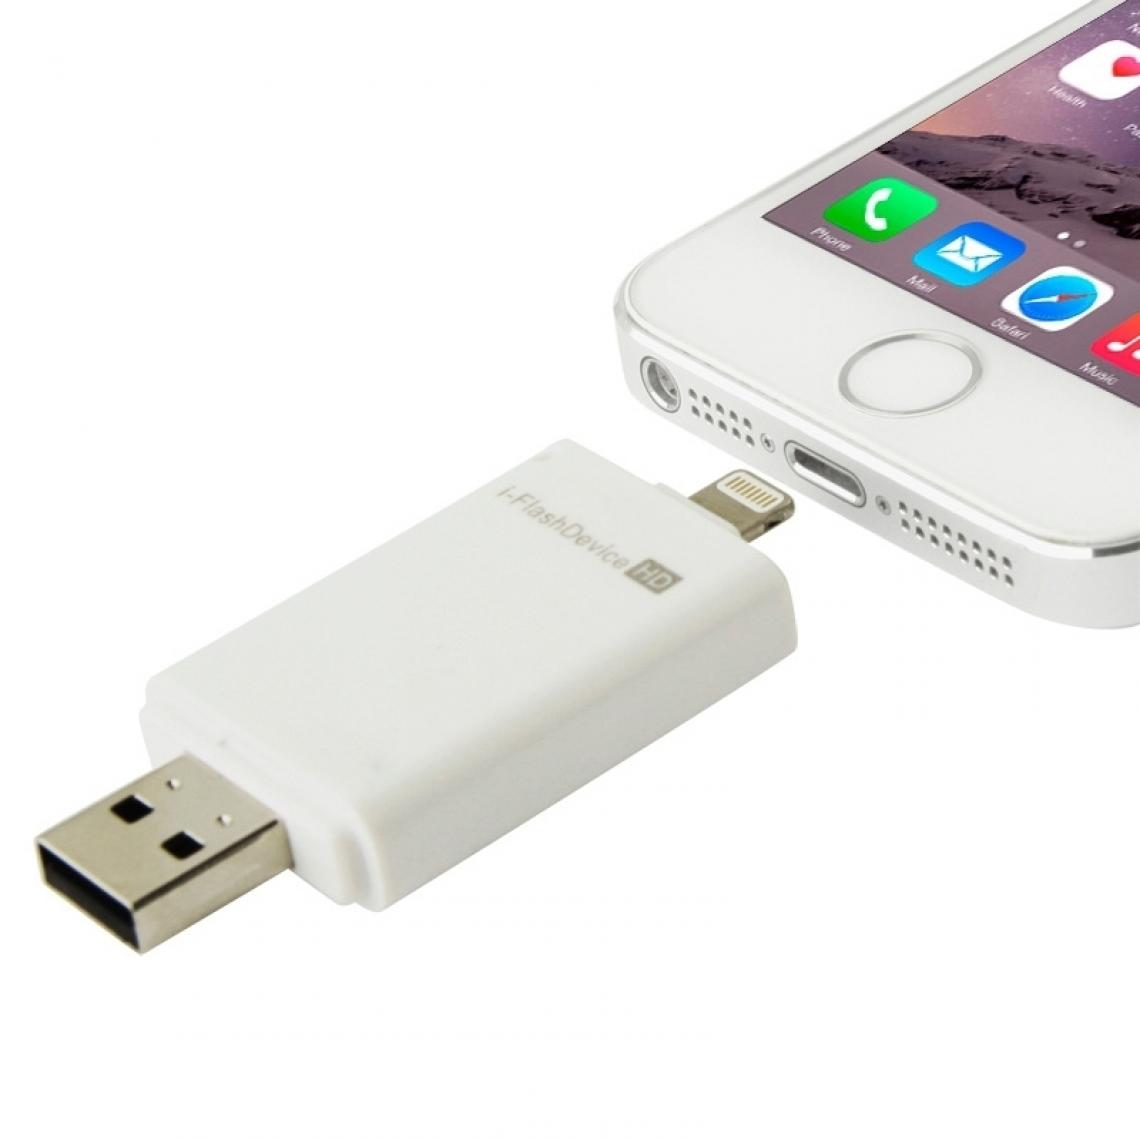 Wewoo - Clé USB blanc pour iPhone / iPad / iPod touch 8 Go i-Flash Driver HD U disque USB Memory Stick - Clavier